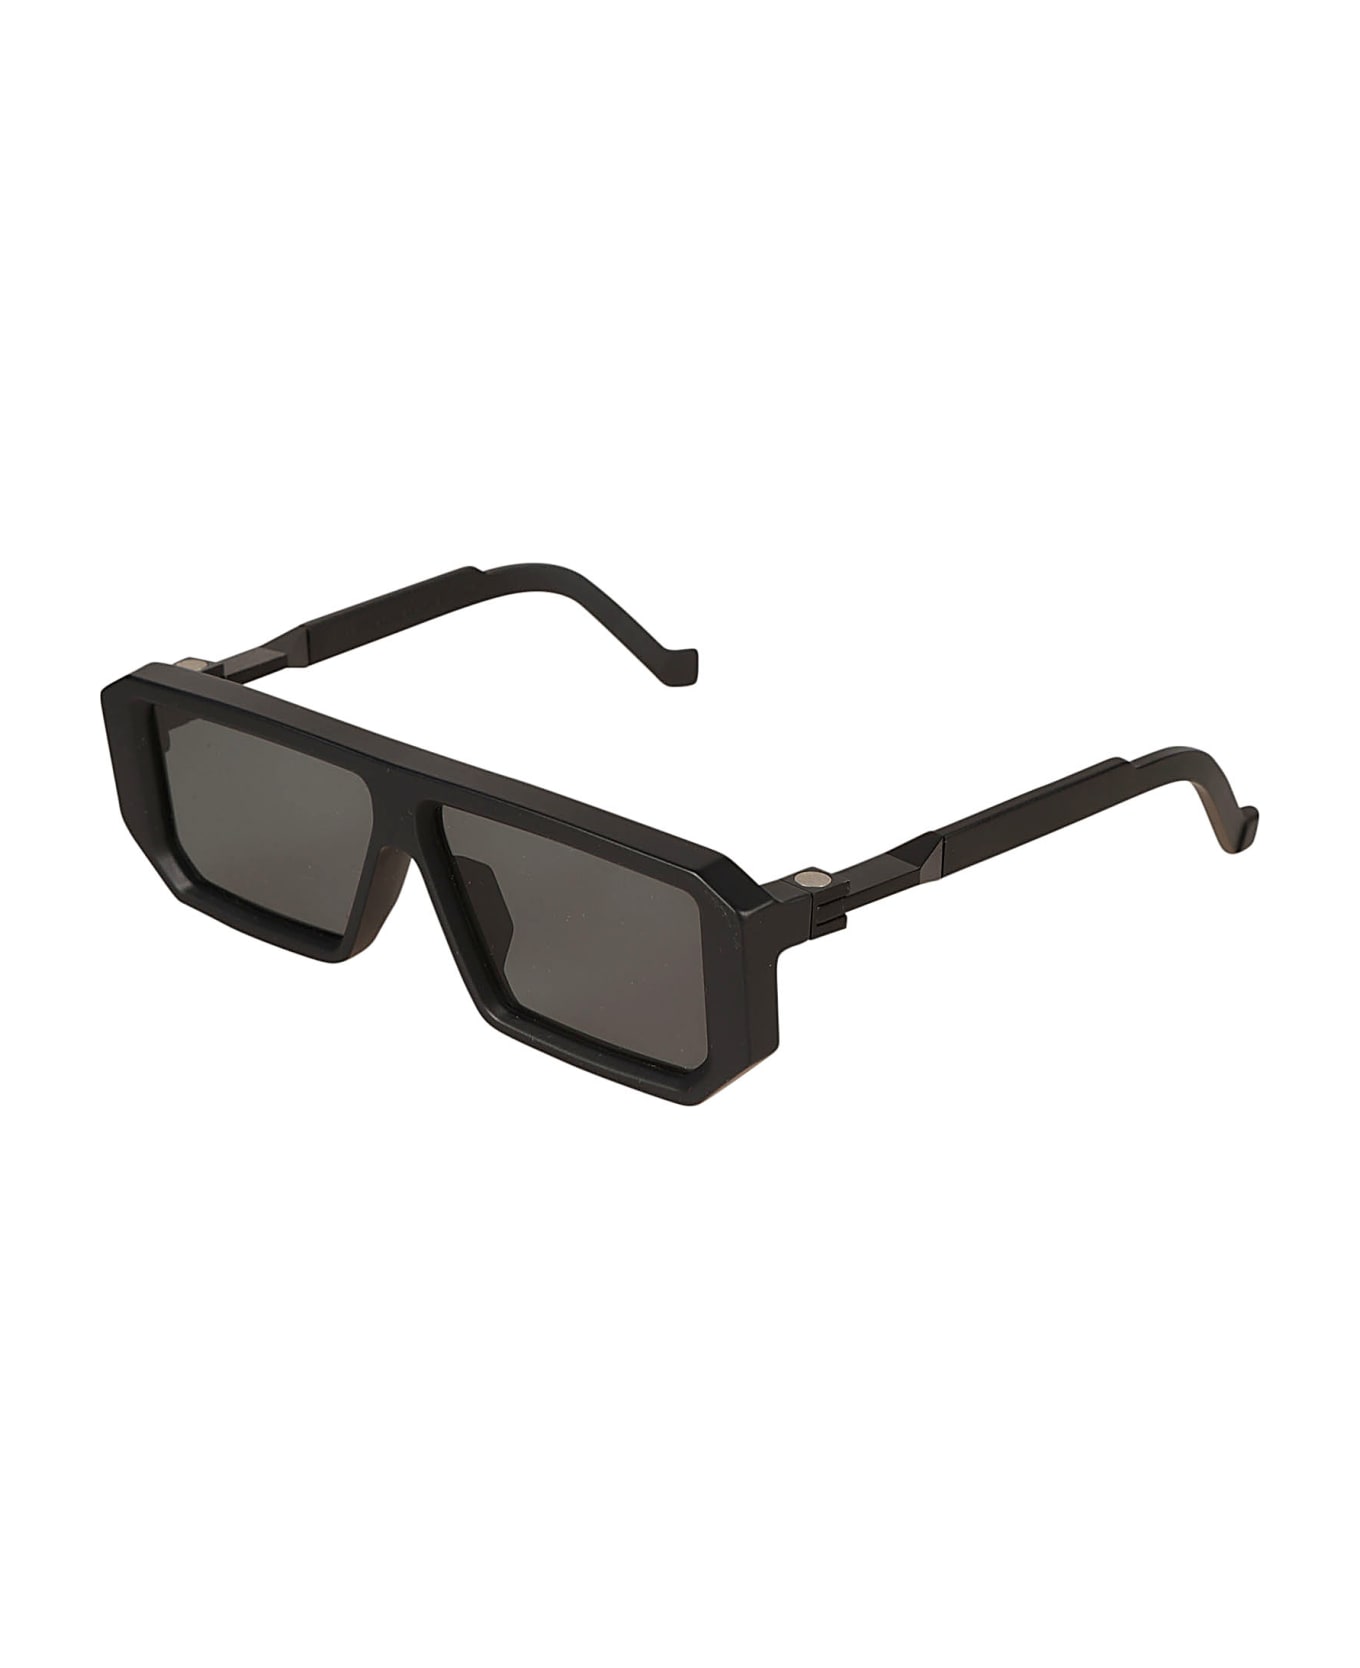 VAVA Rectangular Frame Sunglasses Sunglasses - Black Matte サングラス